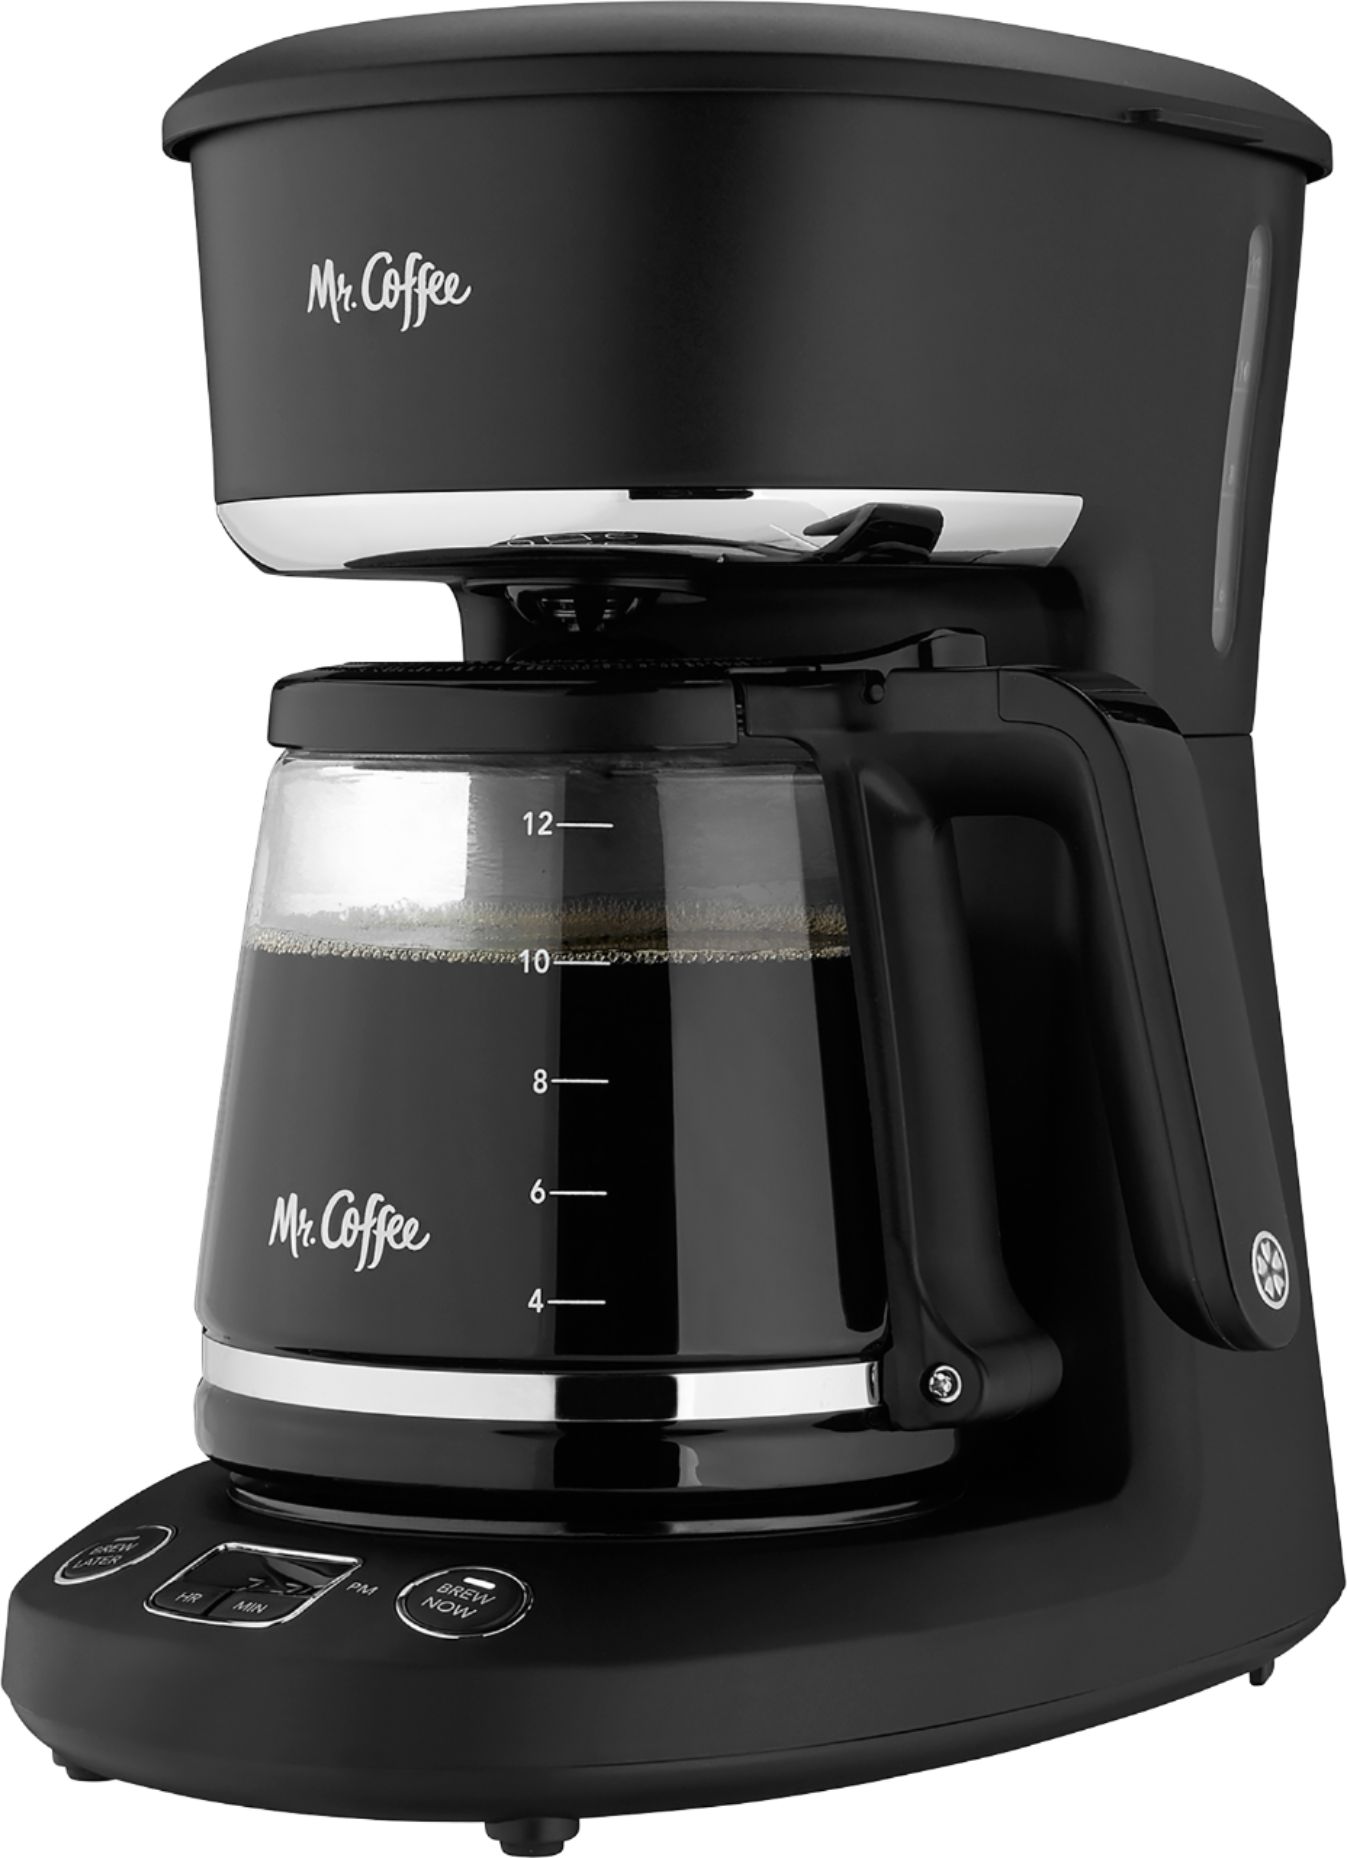 Mr. Coffee® Iced Coffee Maker - Black, 1 ct - Kroger